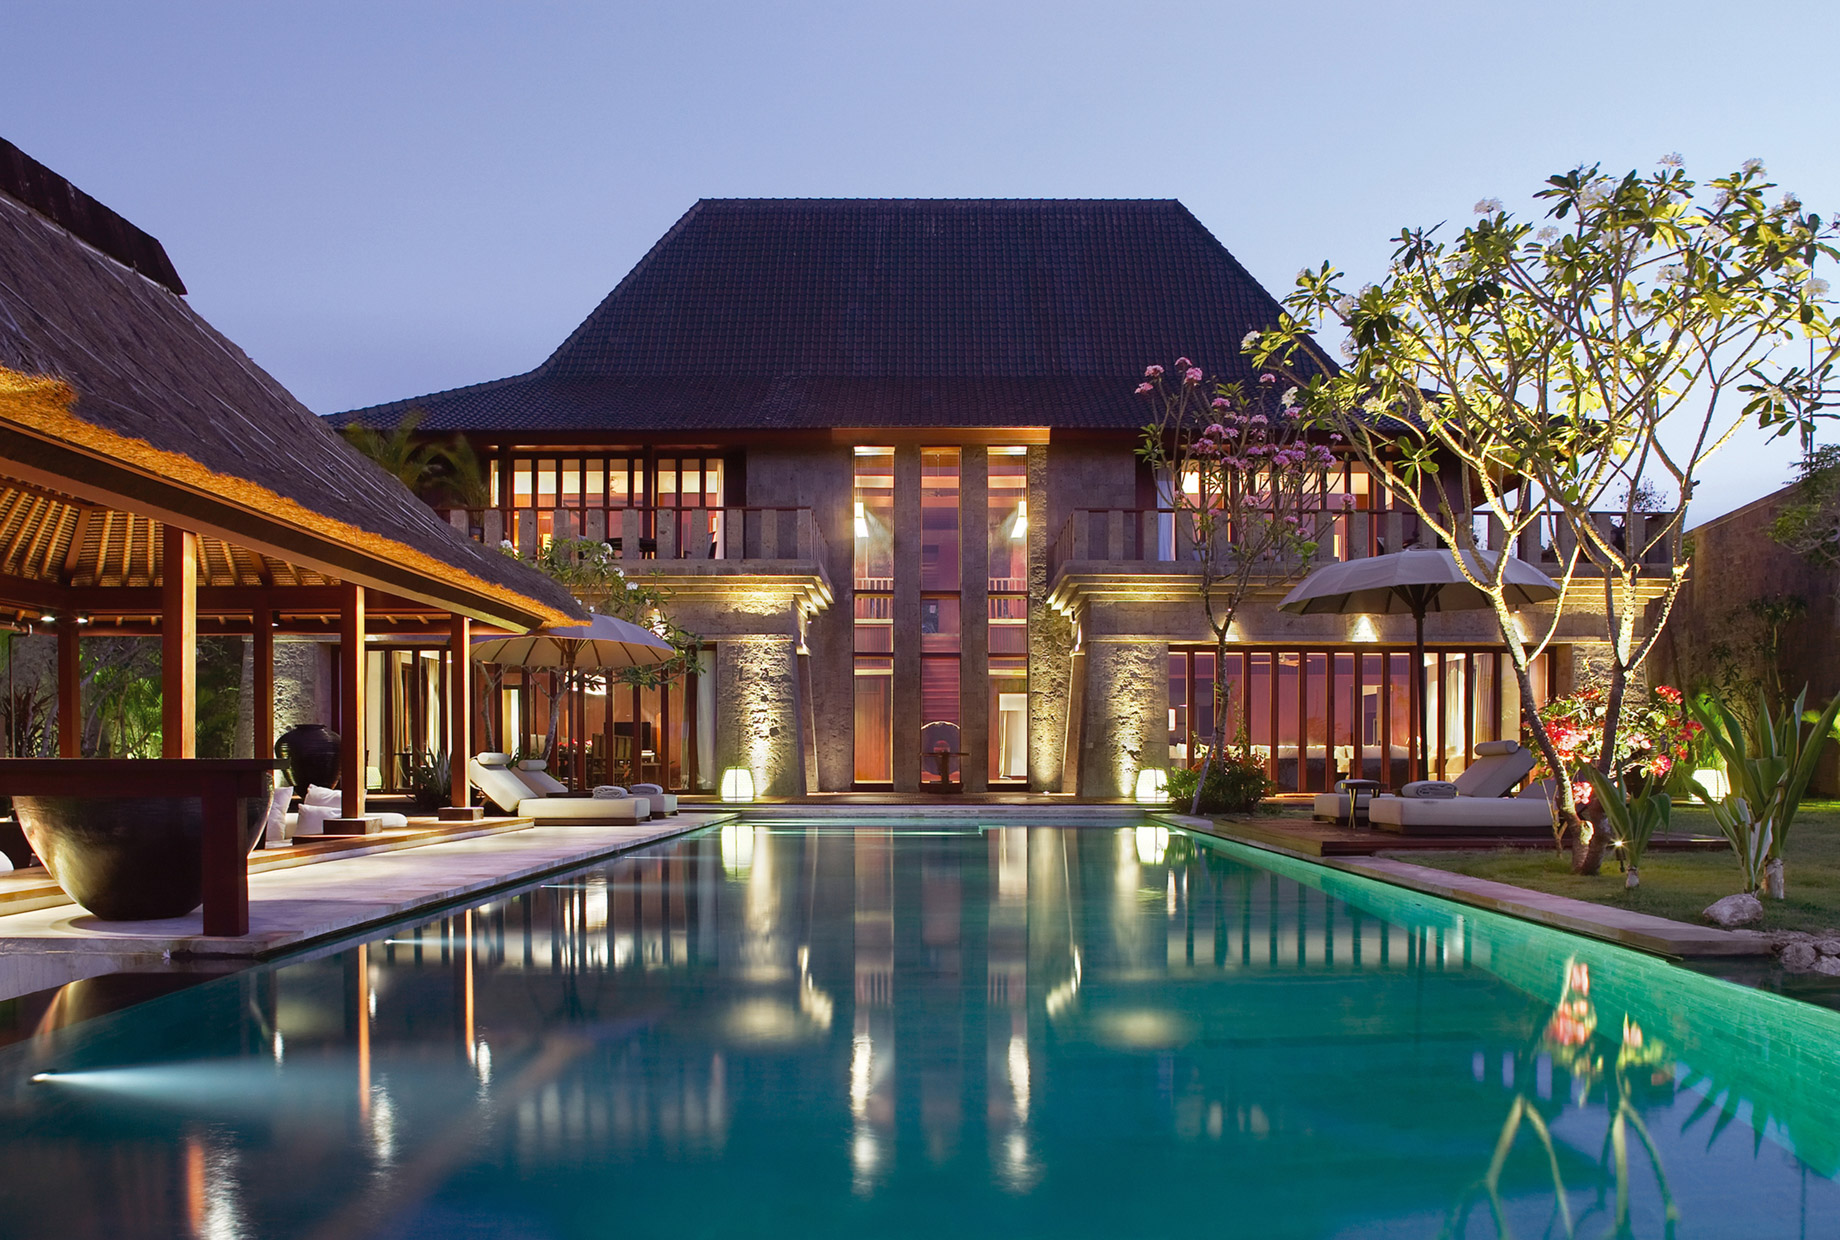 Bvlgari Resort Bali – Uluwatu, Bali, Indonesia – The Bvlgari Villa Pool Deck Twilight